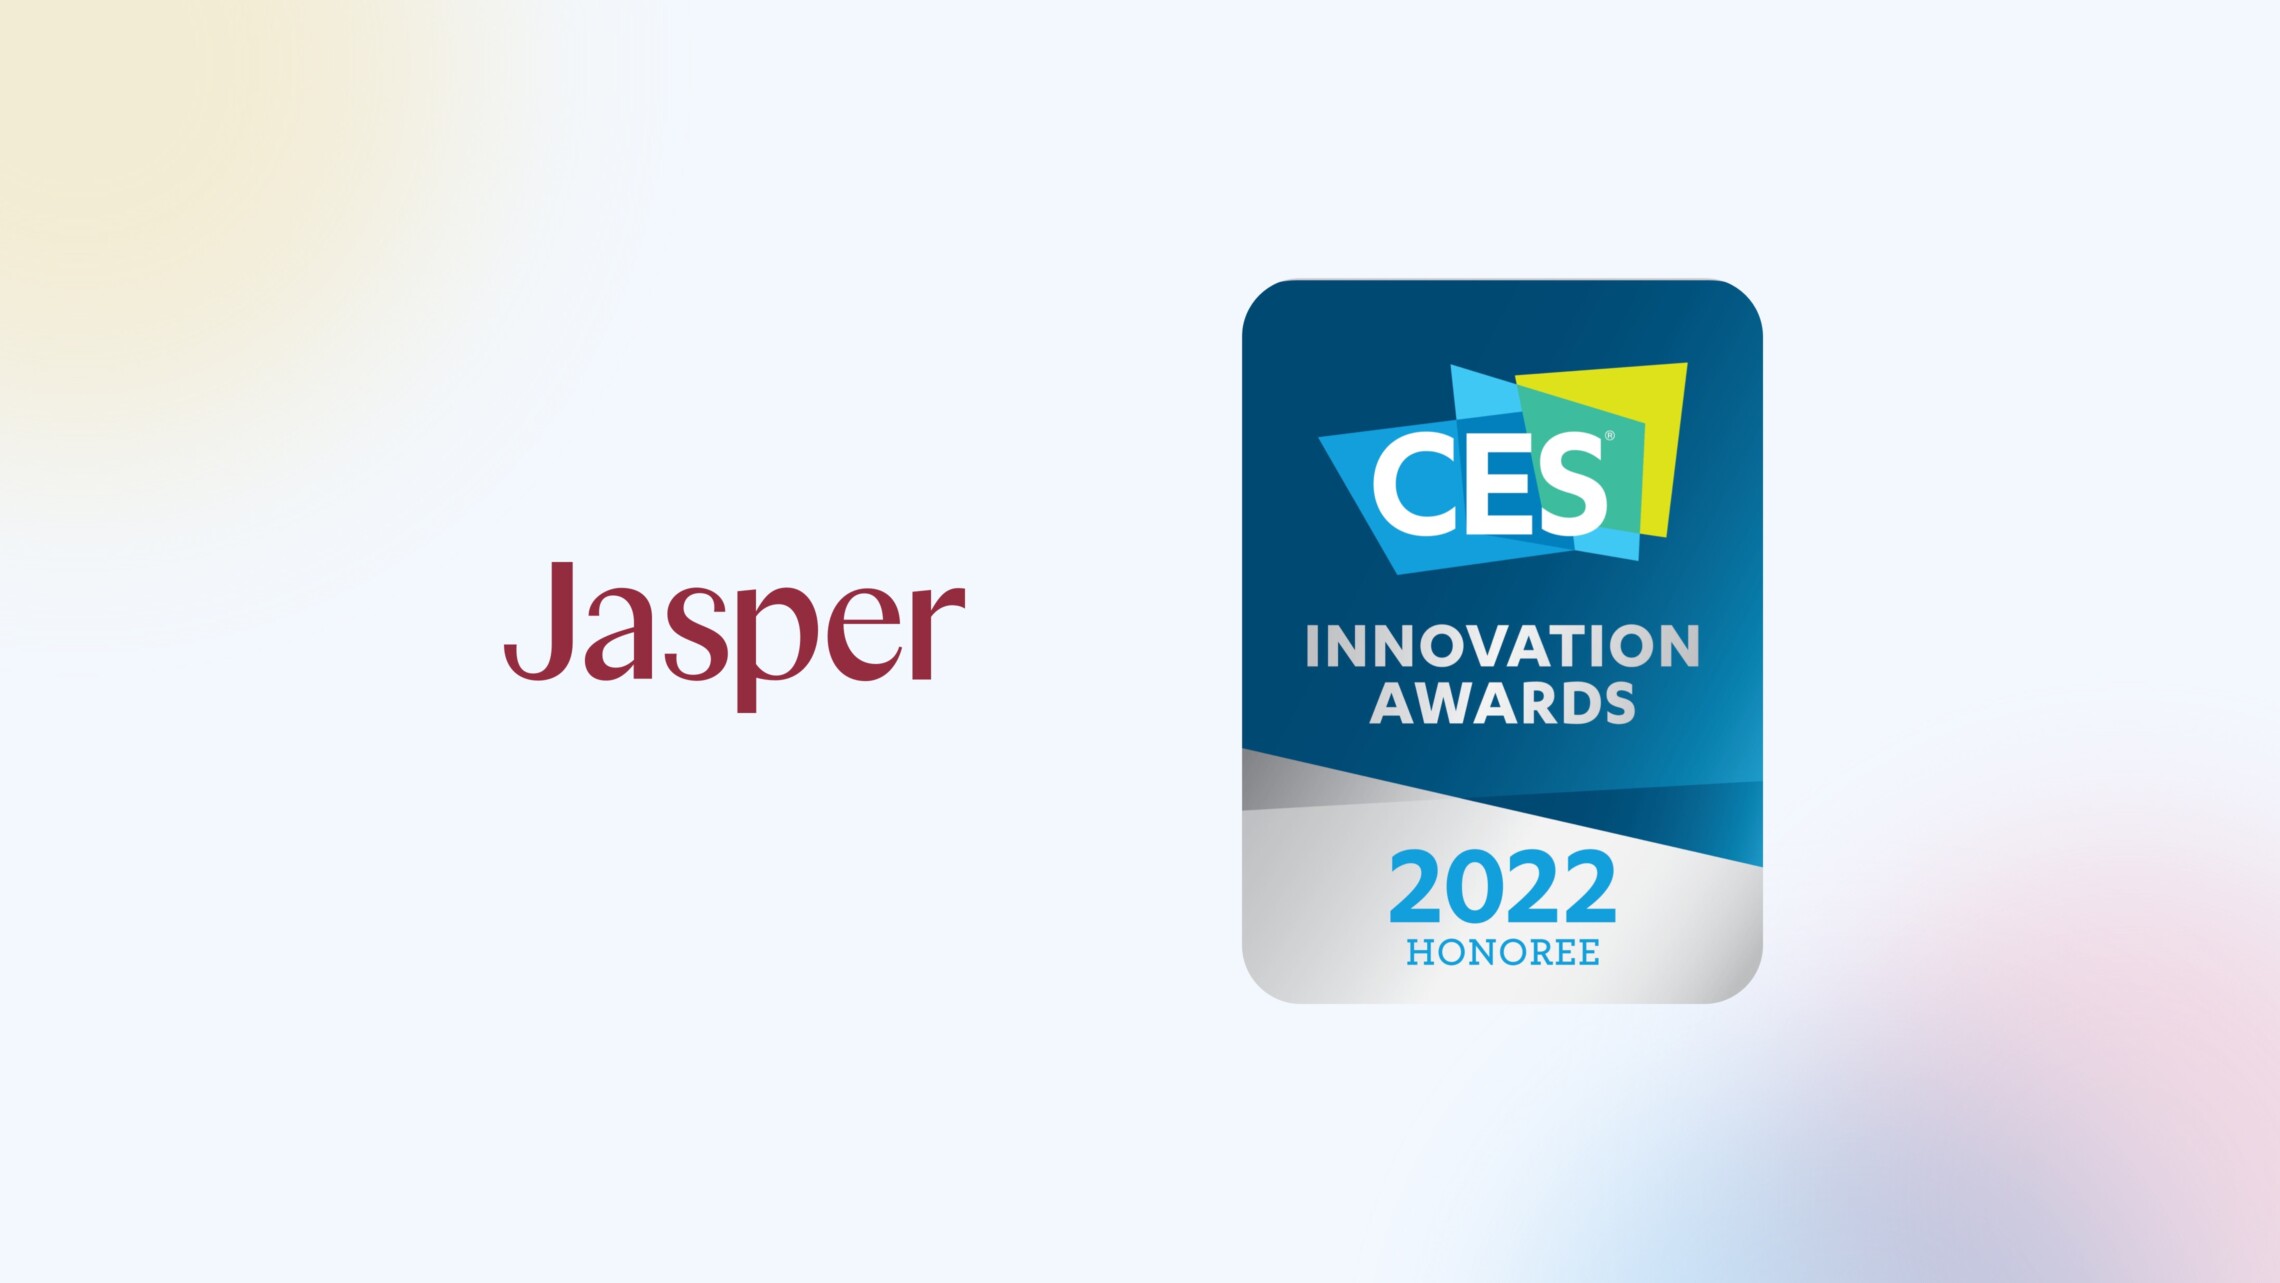 Jasper logo and CES Innovations Awards 2022 Honoree